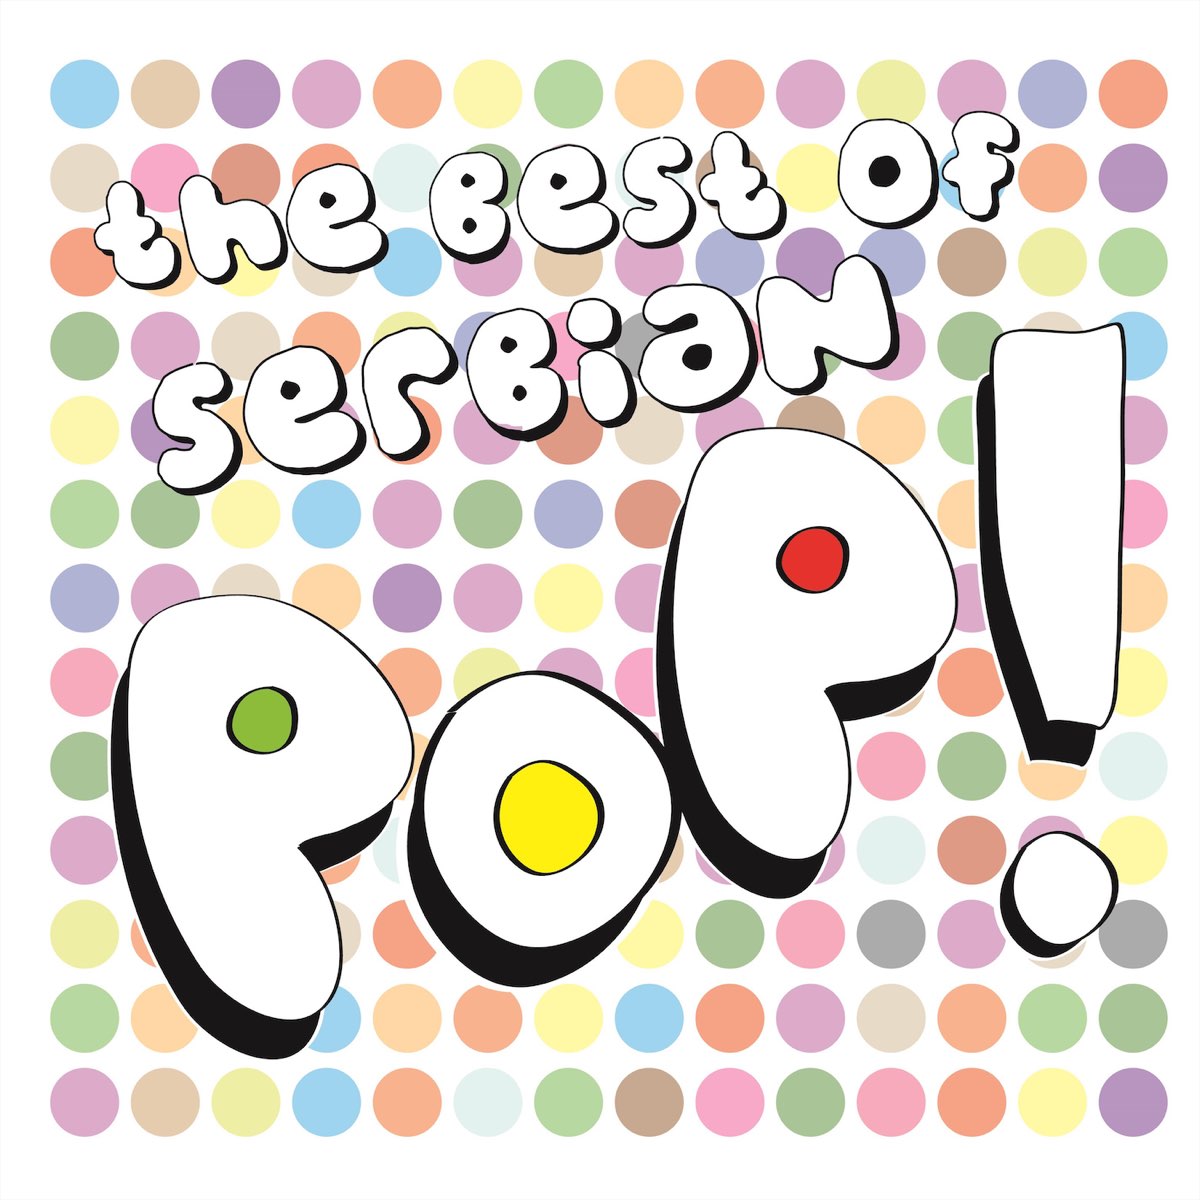 Best of Serbian Pop - Album by Various Artists - Apple Music